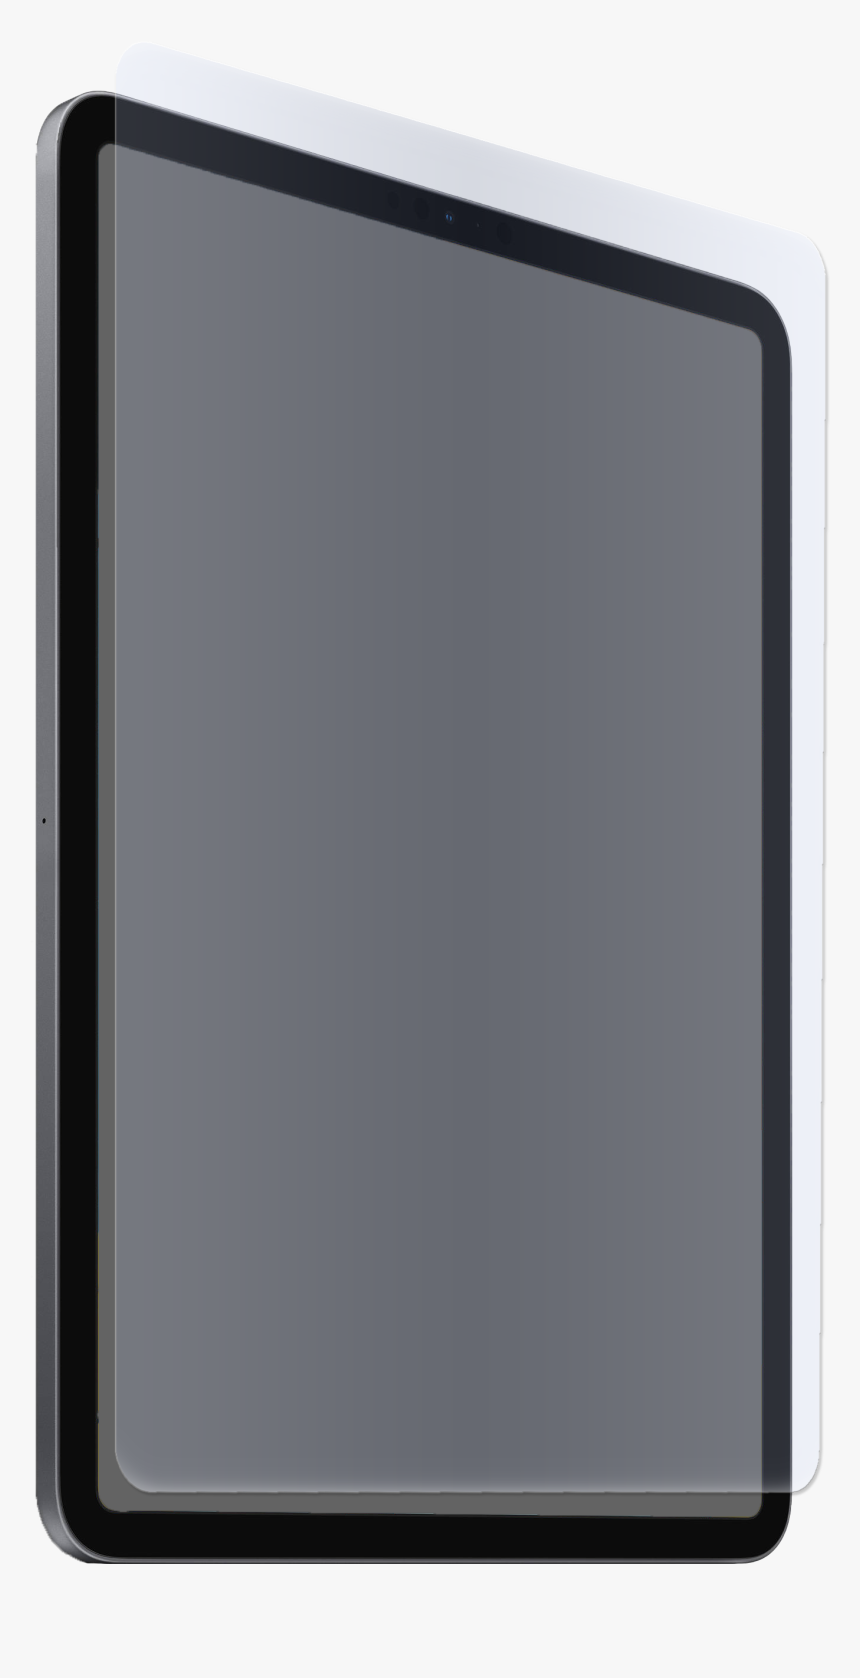 Apple Ipad Pro - Flat Panel Display, HD Png Download, Free Download